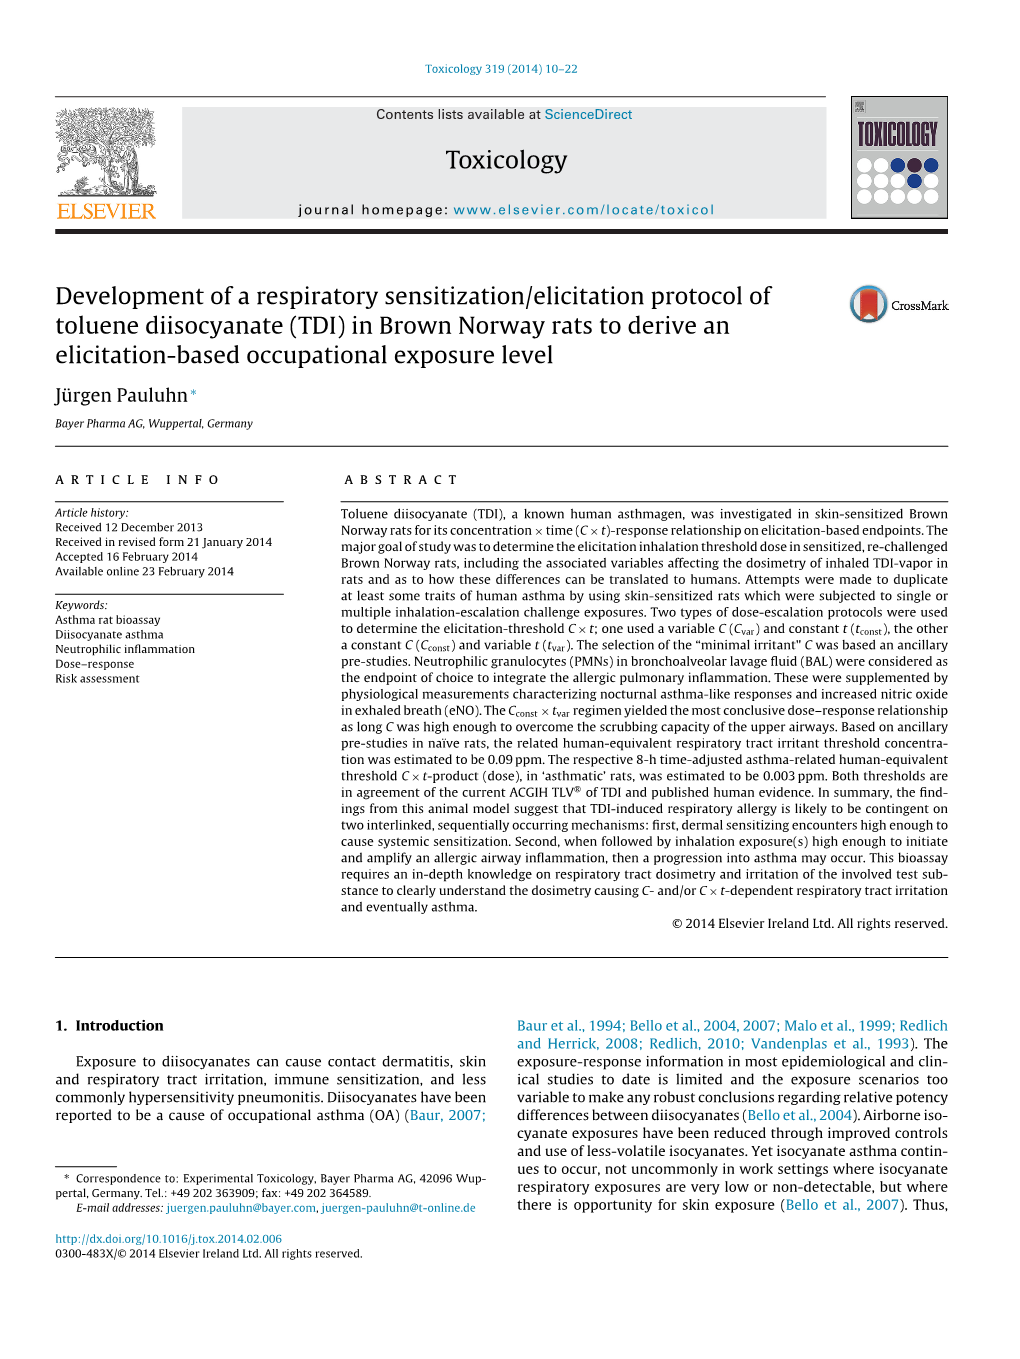 Development of a Respiratory Sensitization/Elicitation Protocol of Toluene Diisocyanate